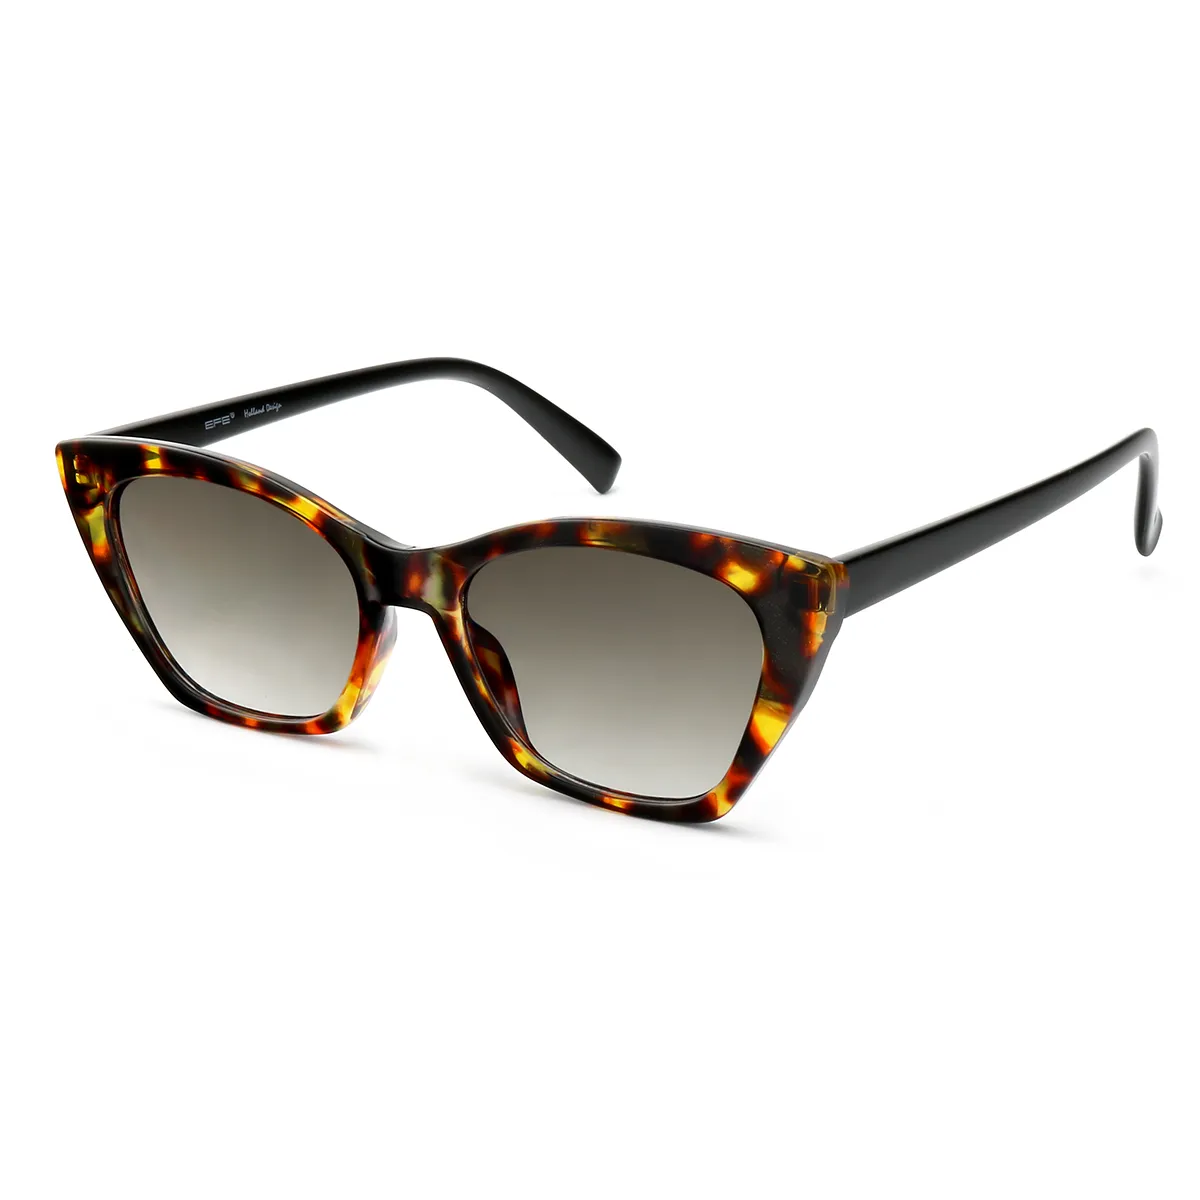 Fashion Cat-eye Demi Sunglasses for Women